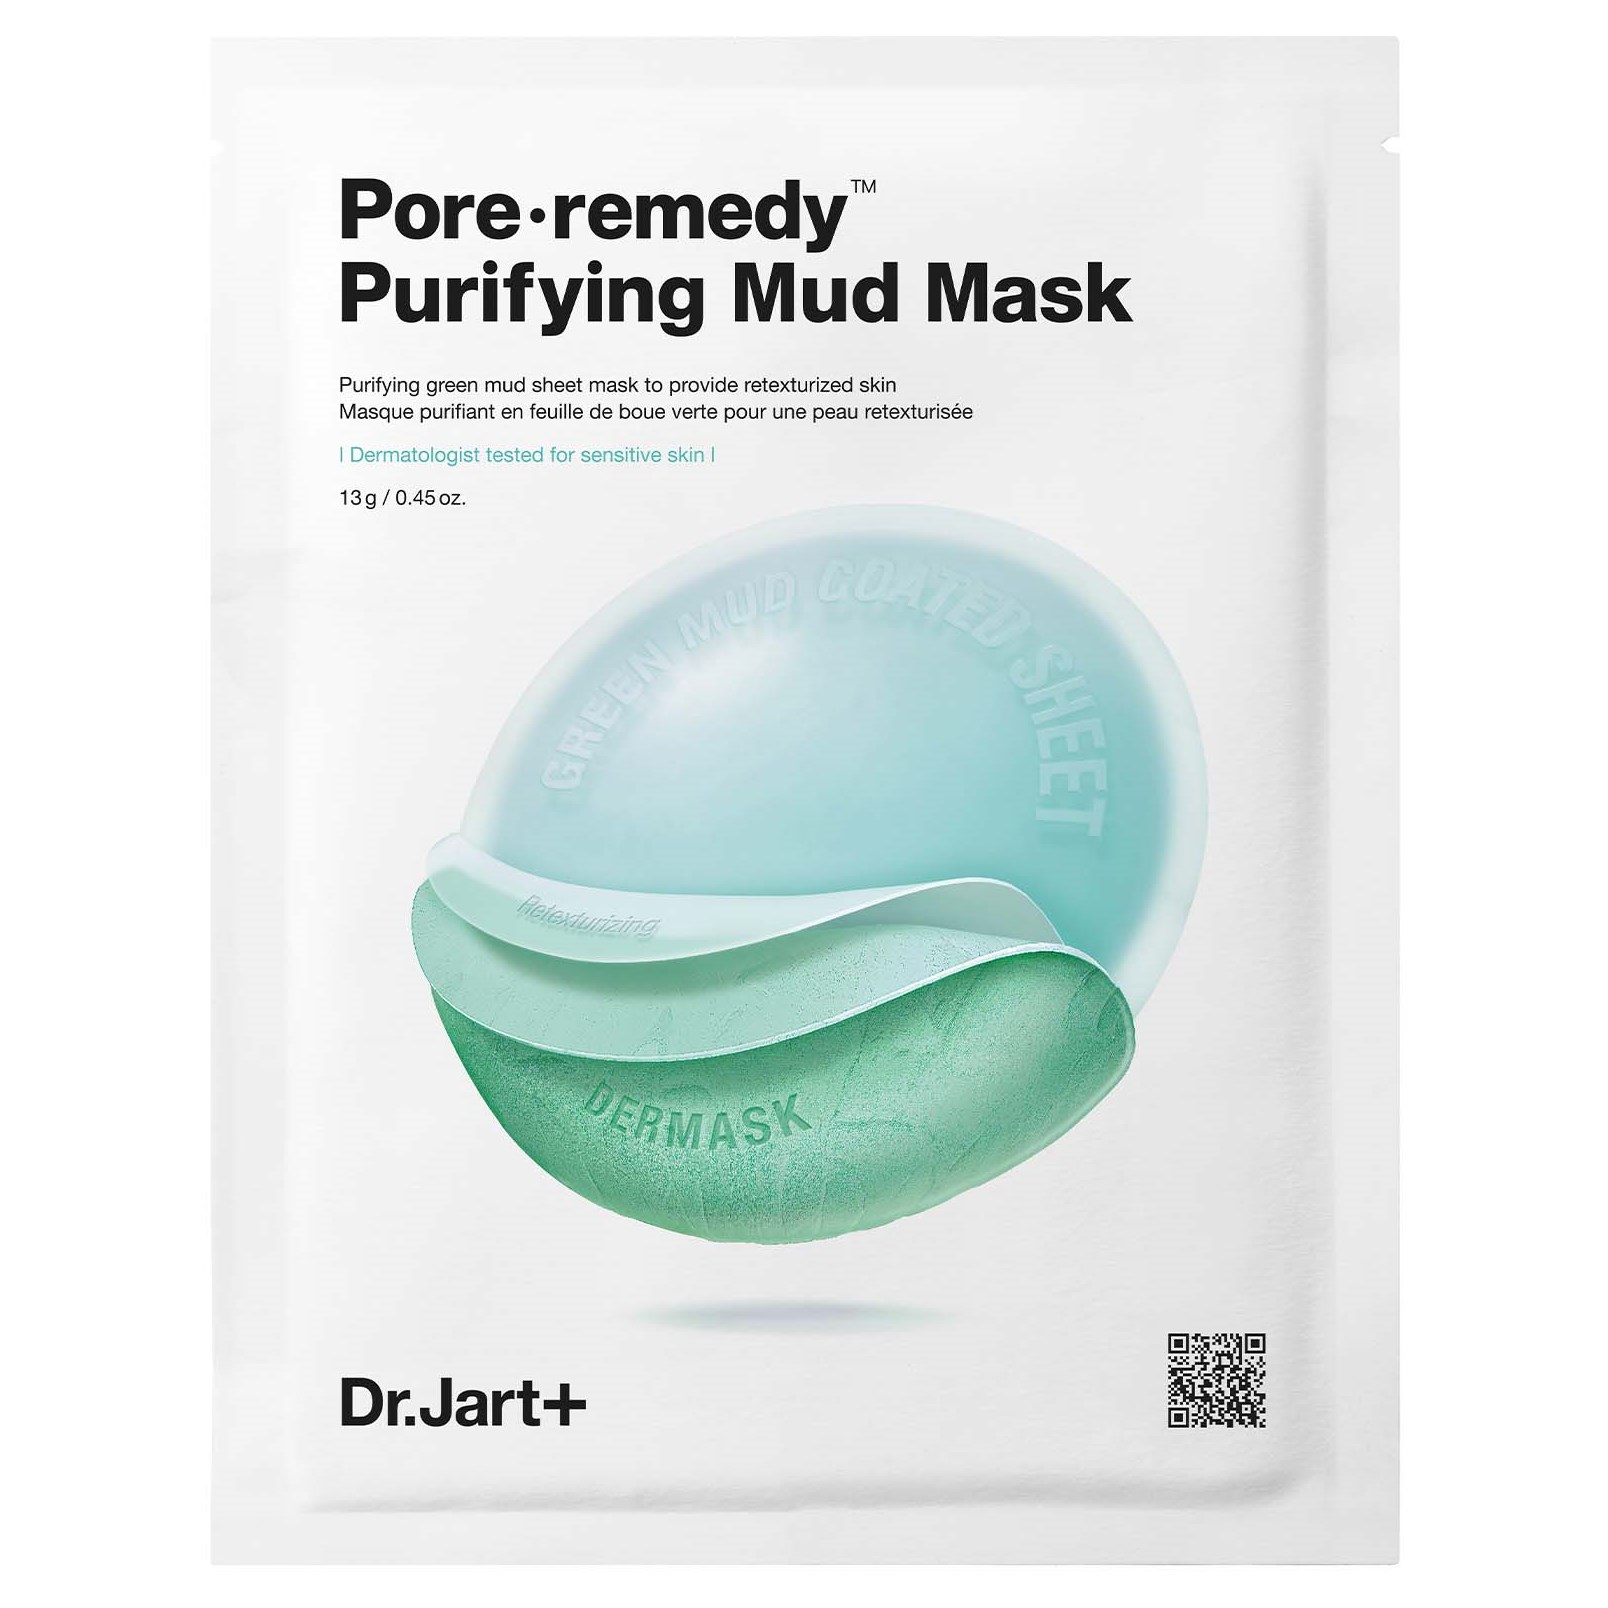 Läs mer om Dr.Jart+ Pore-remedy Purifying Mud Mask